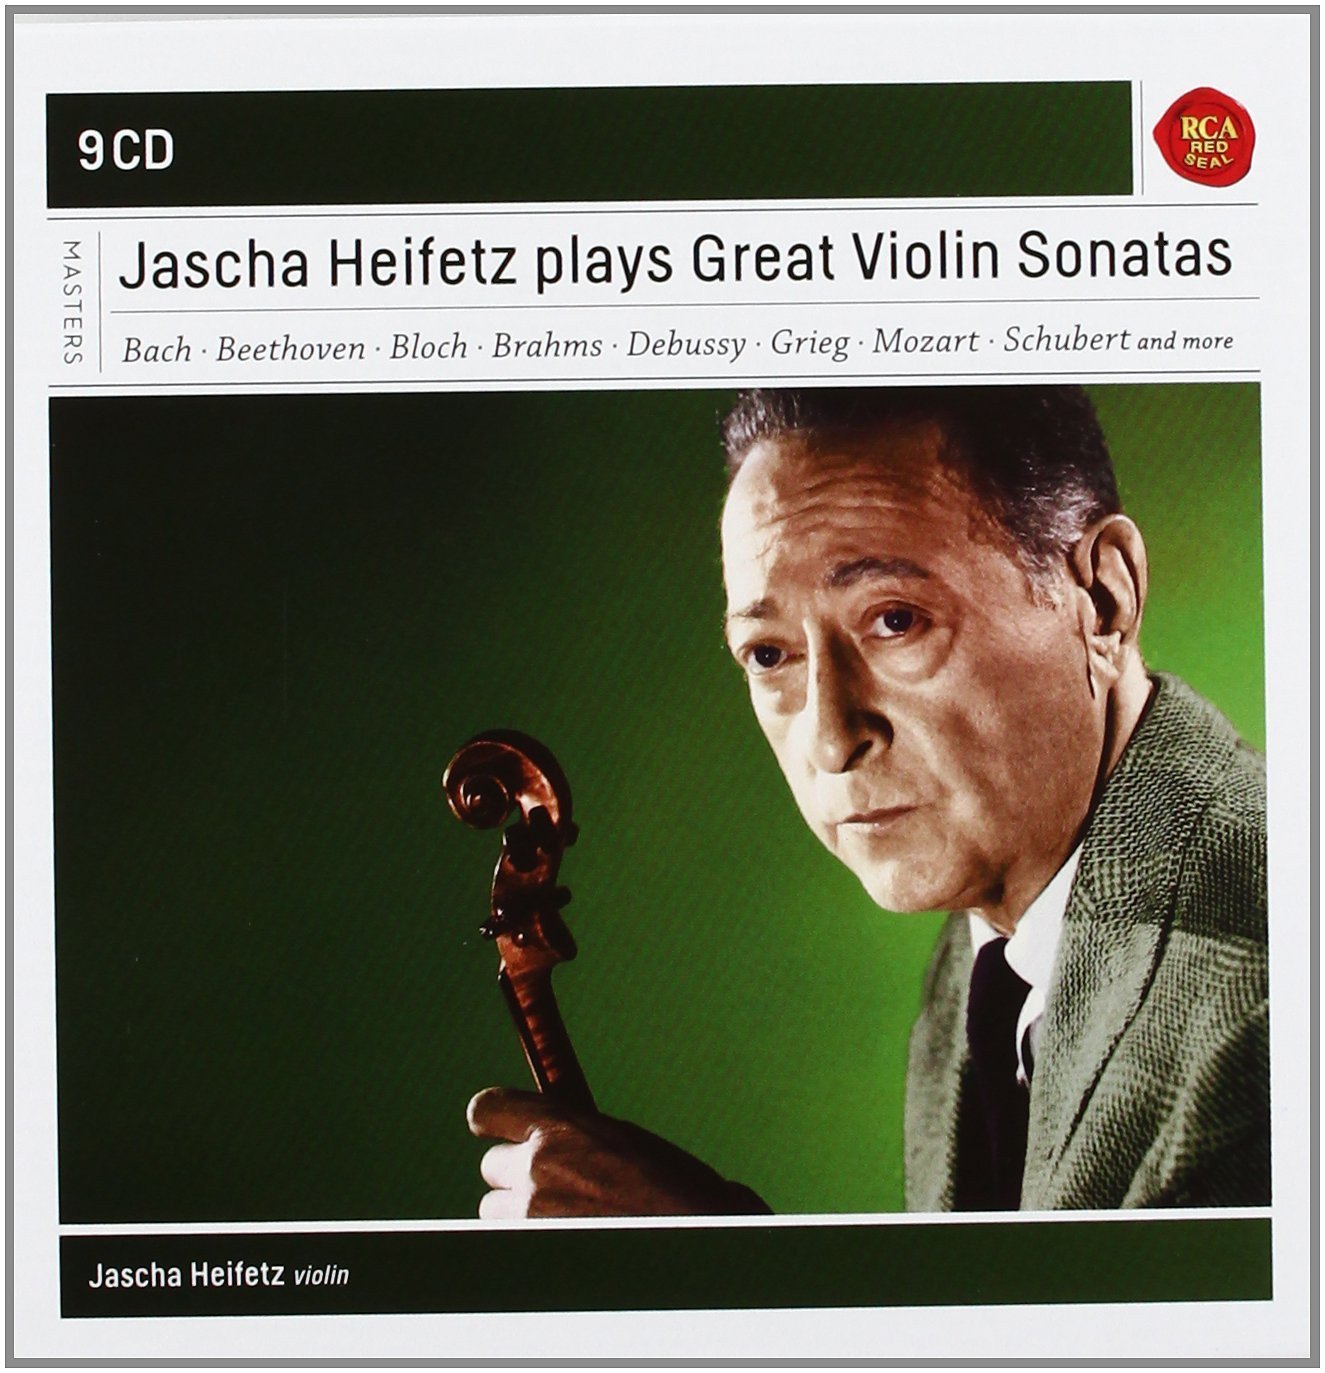 JASCHA HEIFETZ PLAYS SONATAS FOR VIOLIN - Bach, Beethoven, Bloch, Debussy, Grieg, Mozart, Schubert (9 CDs)